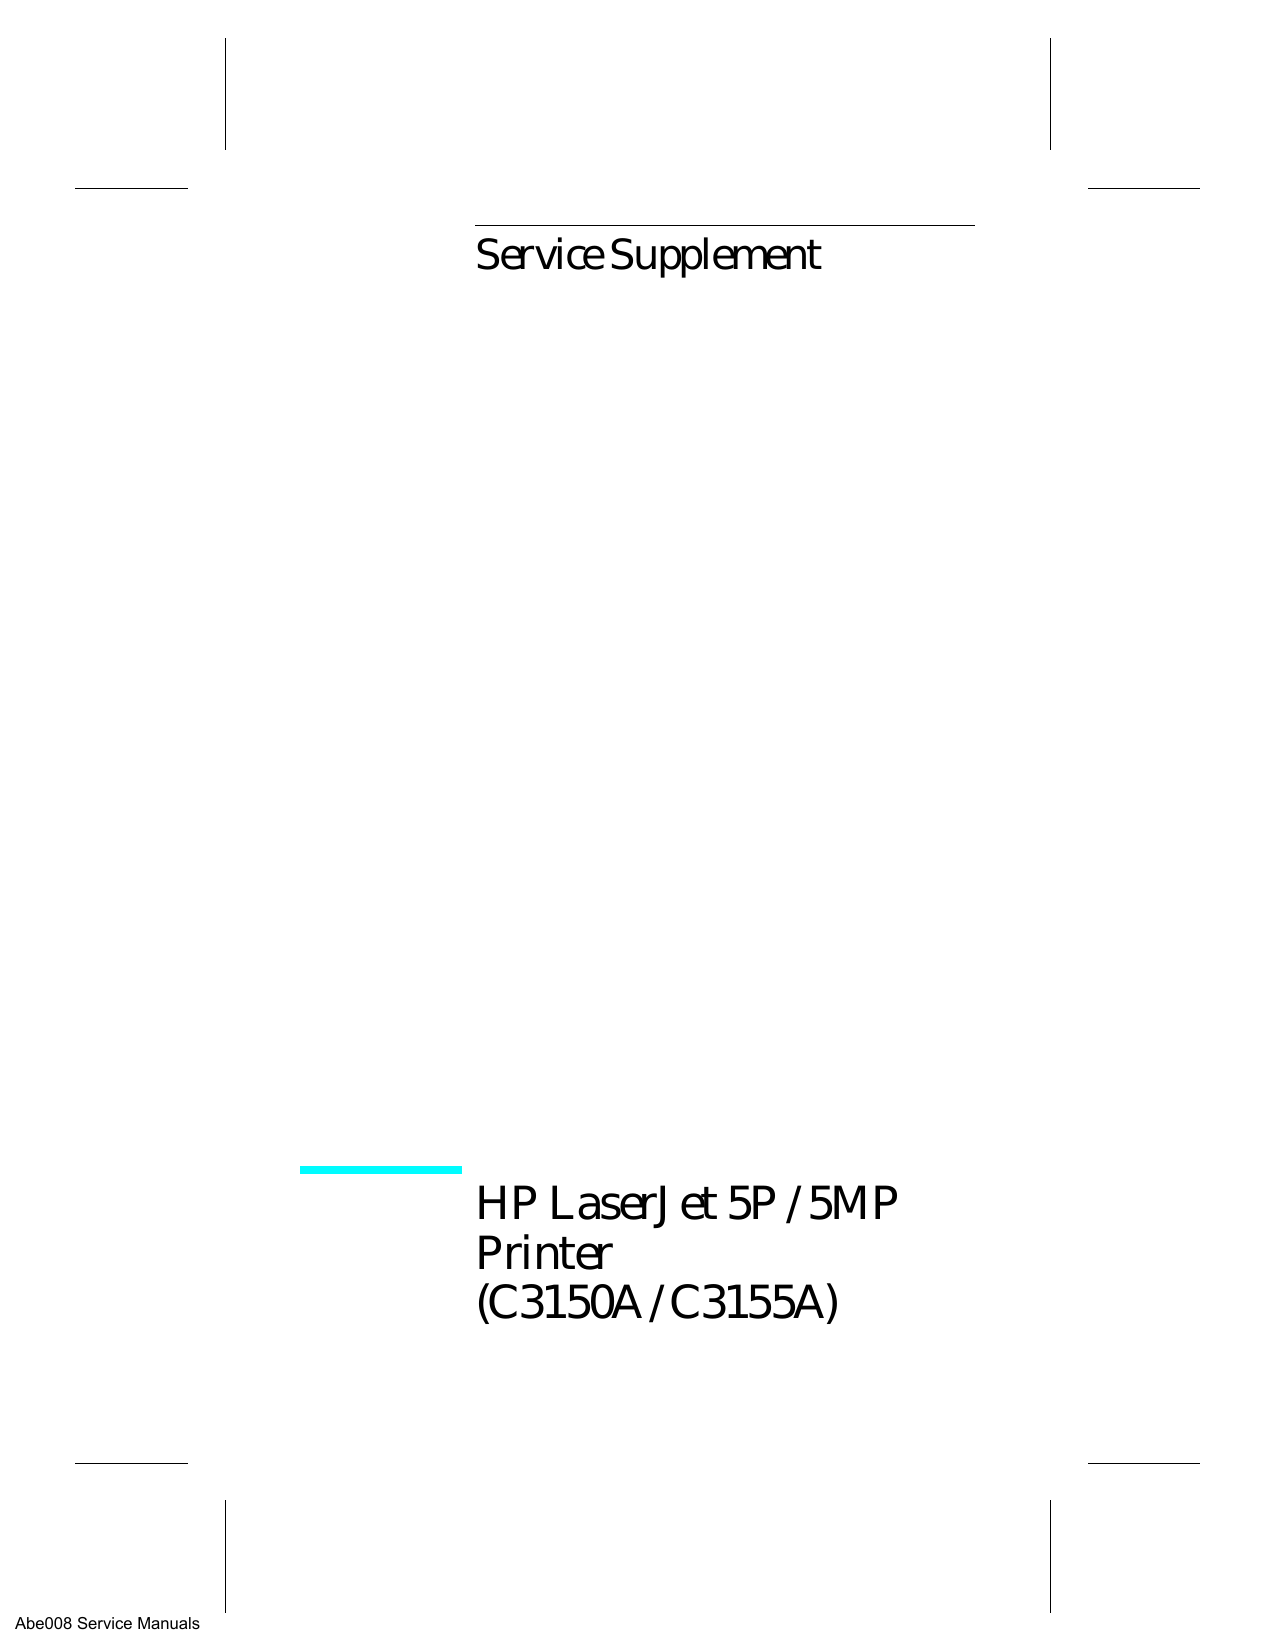 HP Laserjet 5P, 5MP, 6P, 6MP laser printer service guide Preview image 2